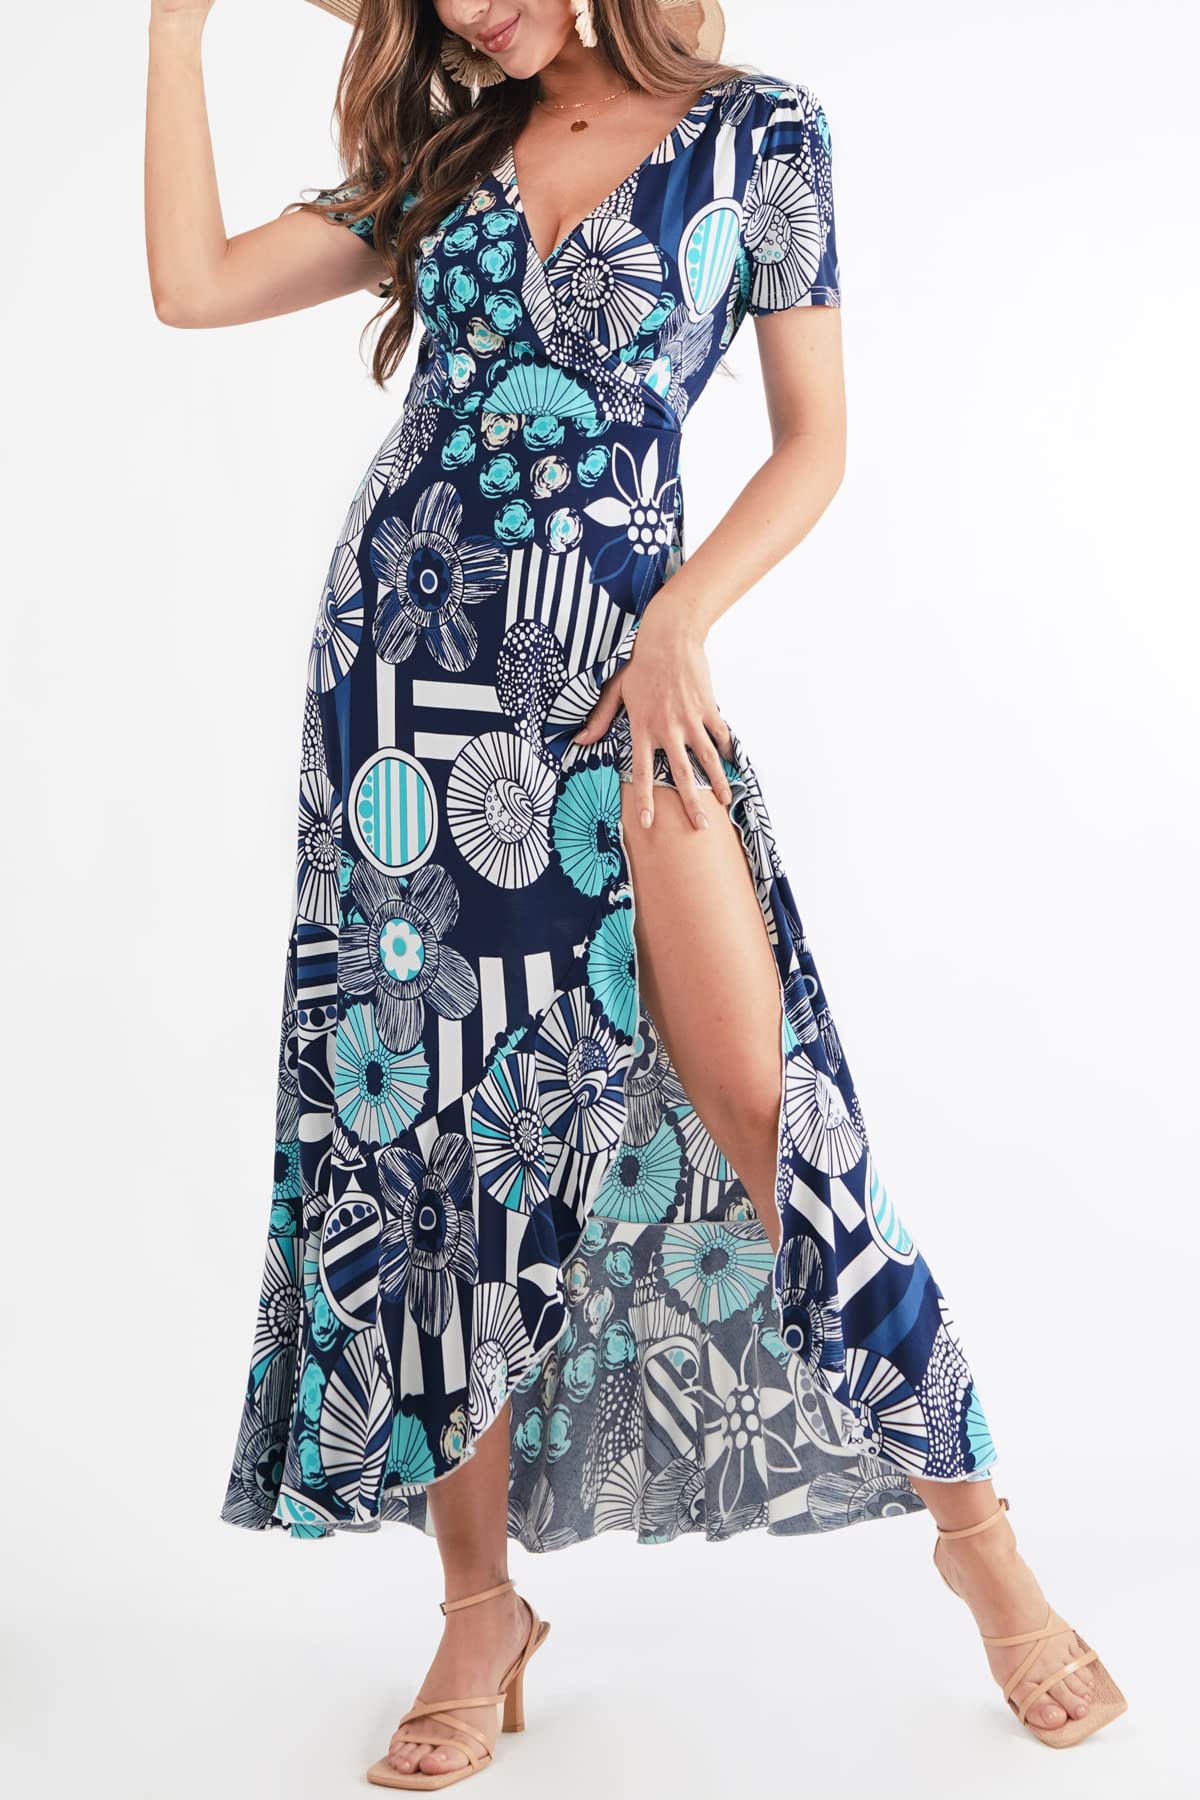 BAISHENGGT Womens Summer Short Sleeve Wrap V Neck Dress Blue Floral Print Ruffle Hem Bohemian Flowy Long Maxi Dresses